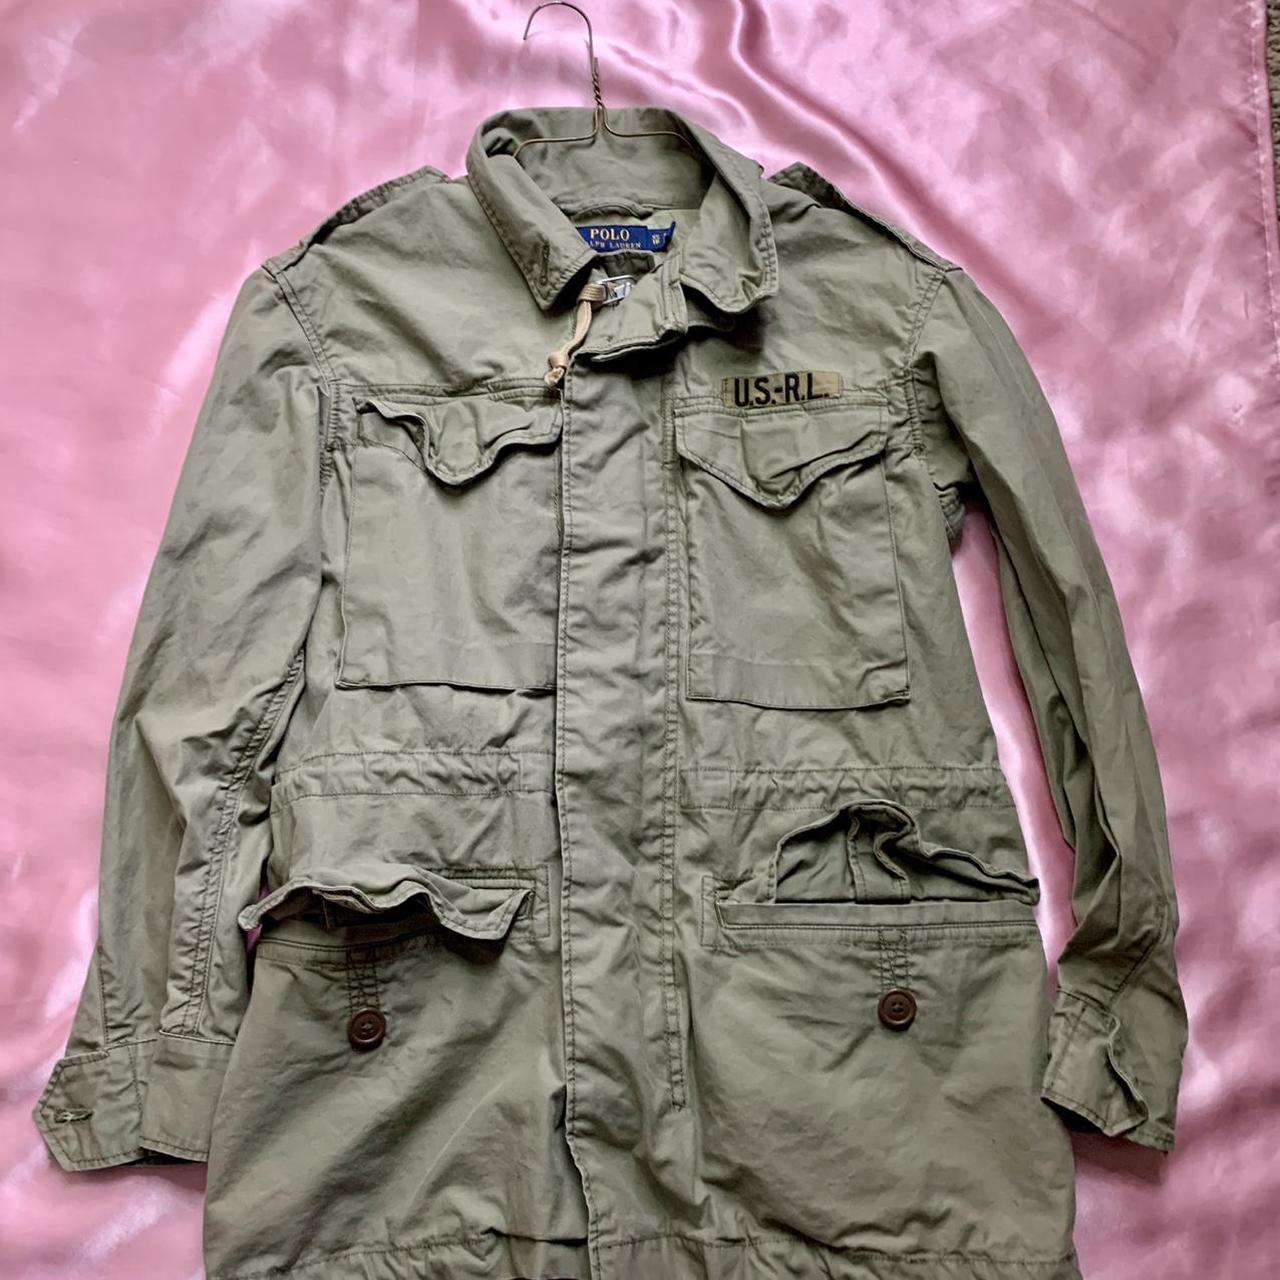 Polo Ralph Lauren army jacket - Depop